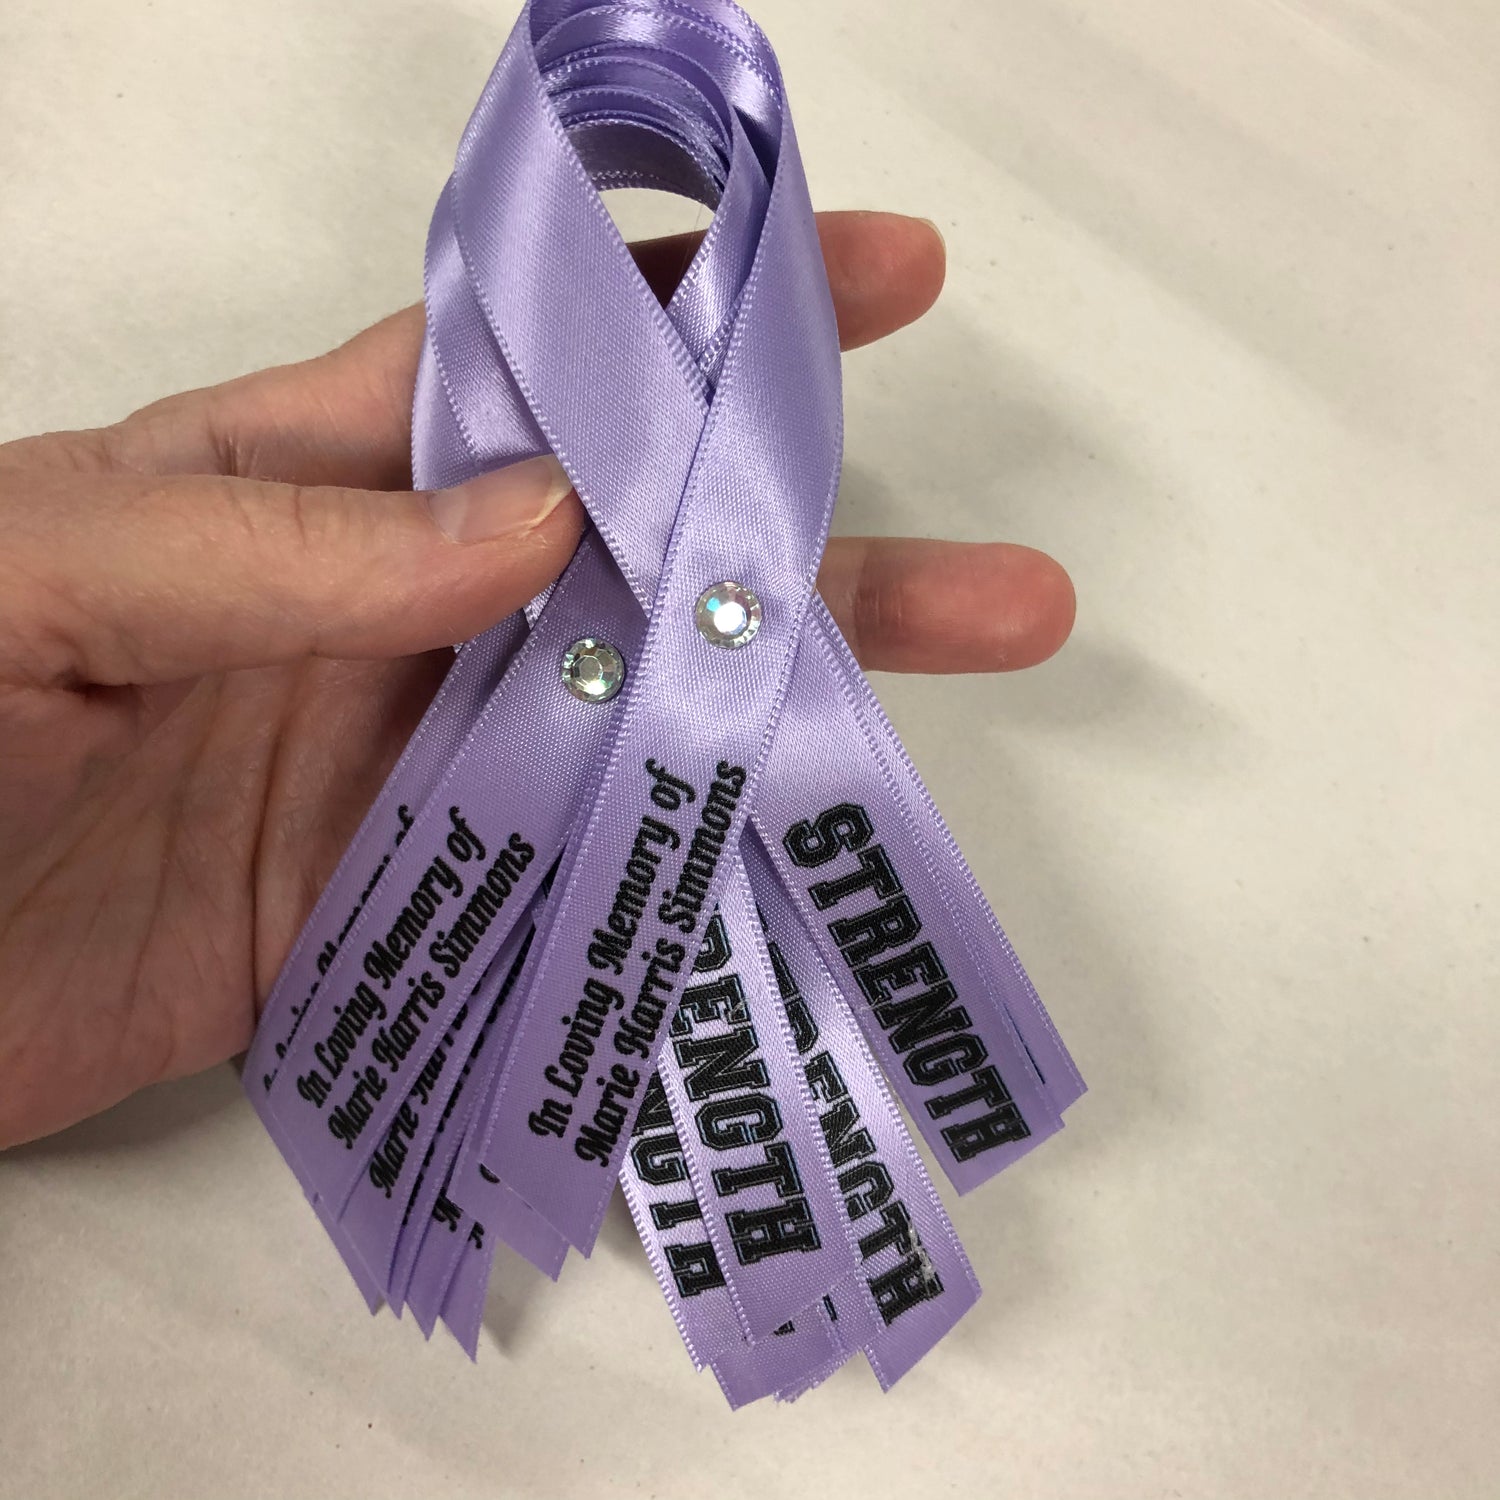 all cancer ribbon